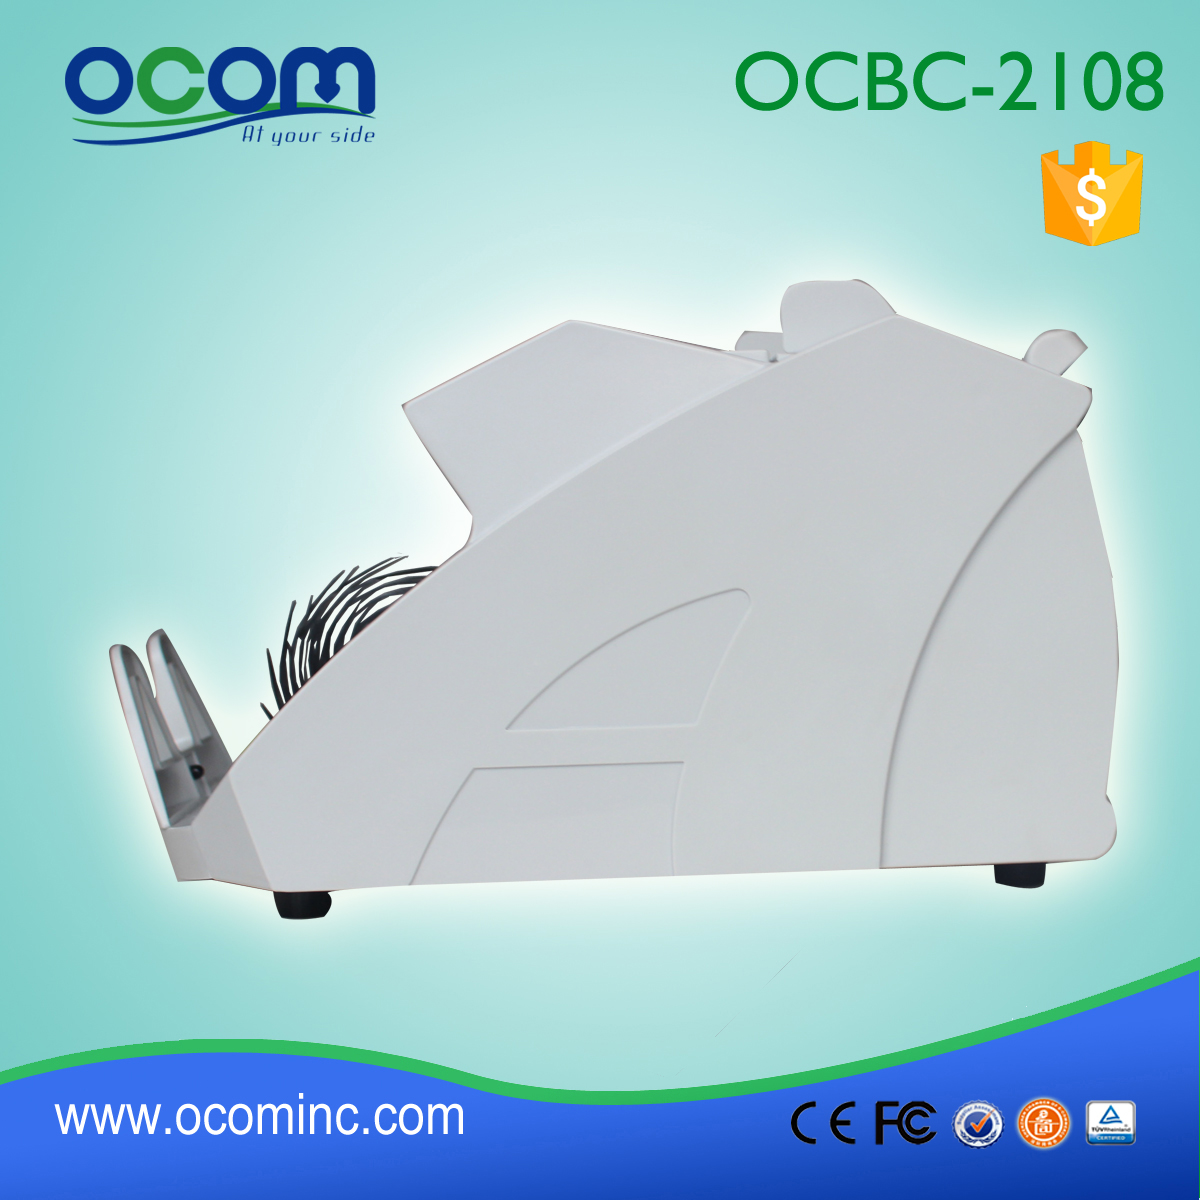 (OCBC-2108) - OCOM gemacht 2016 neueste Banknotenzähler mit uv mg